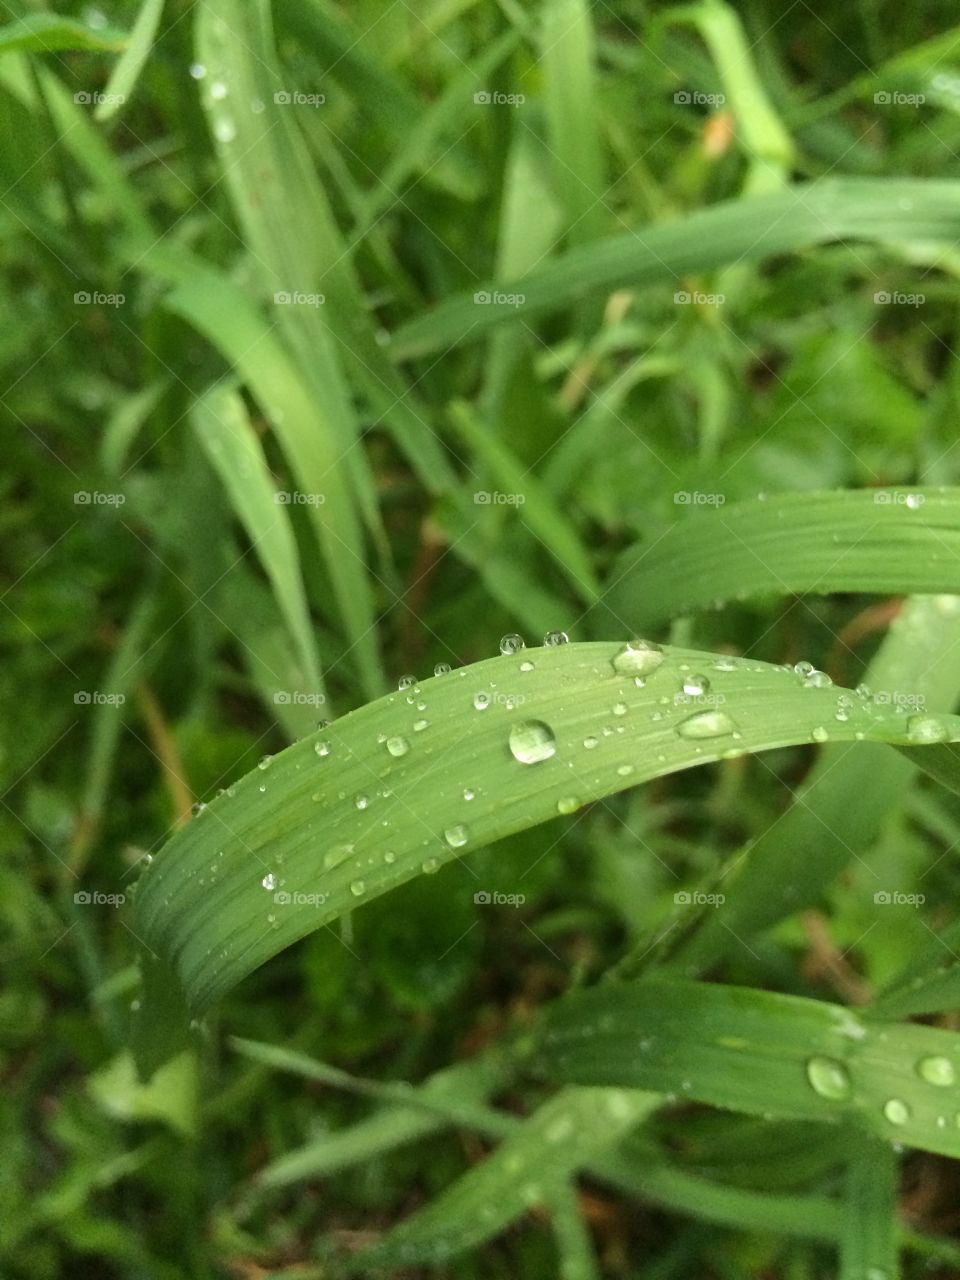 Dewdrops day 